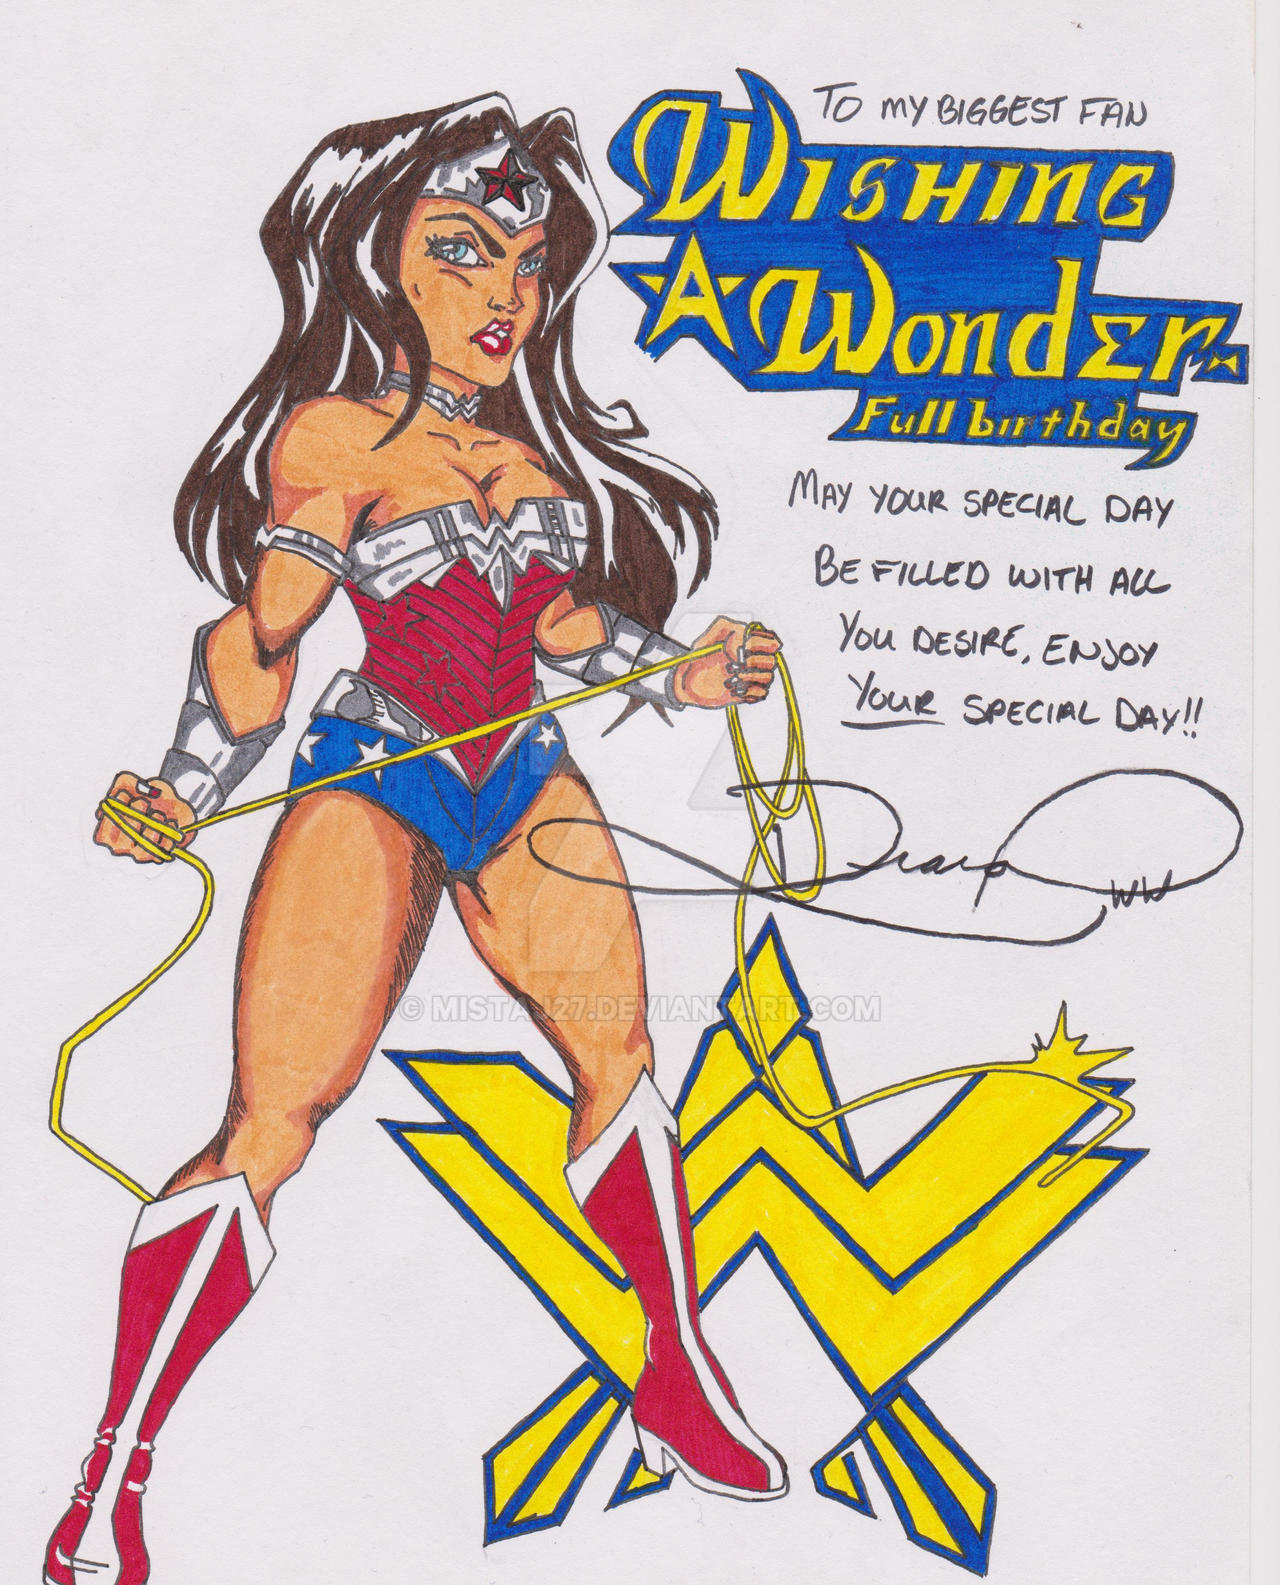 Wonder Woman birthday card by Mistaj27 on DeviantArt